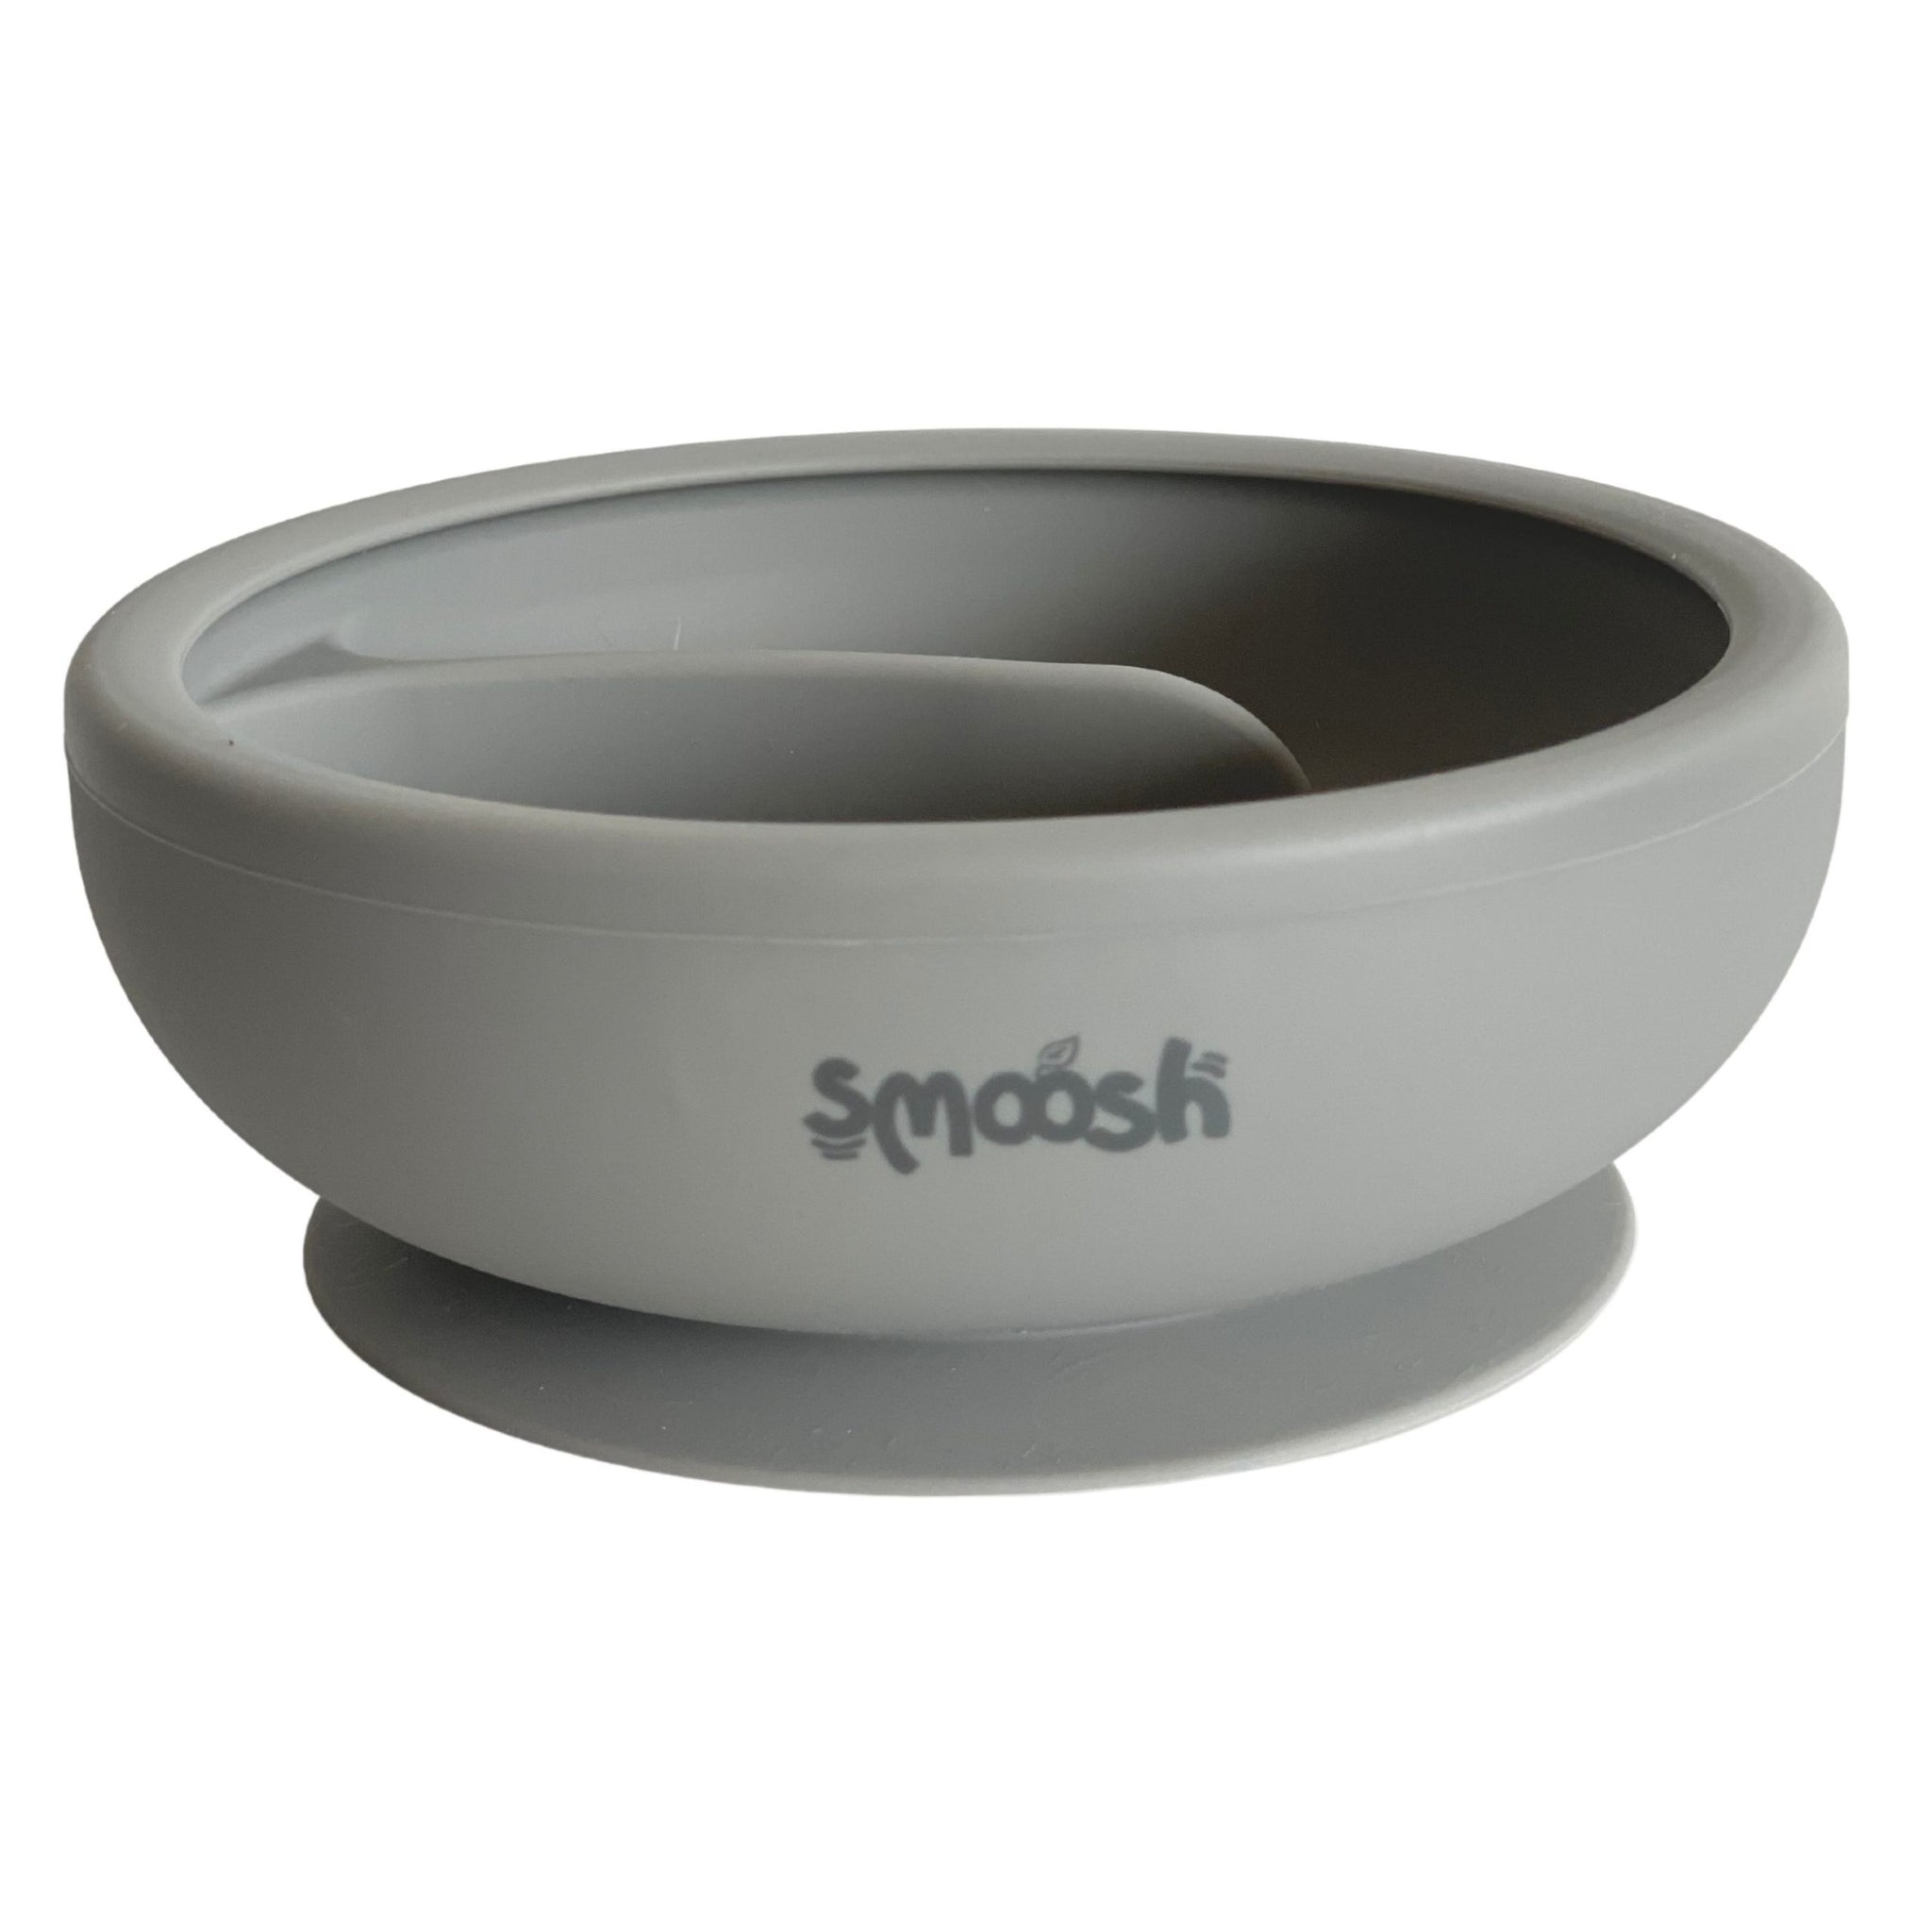 Smoosh - Divider Bowl